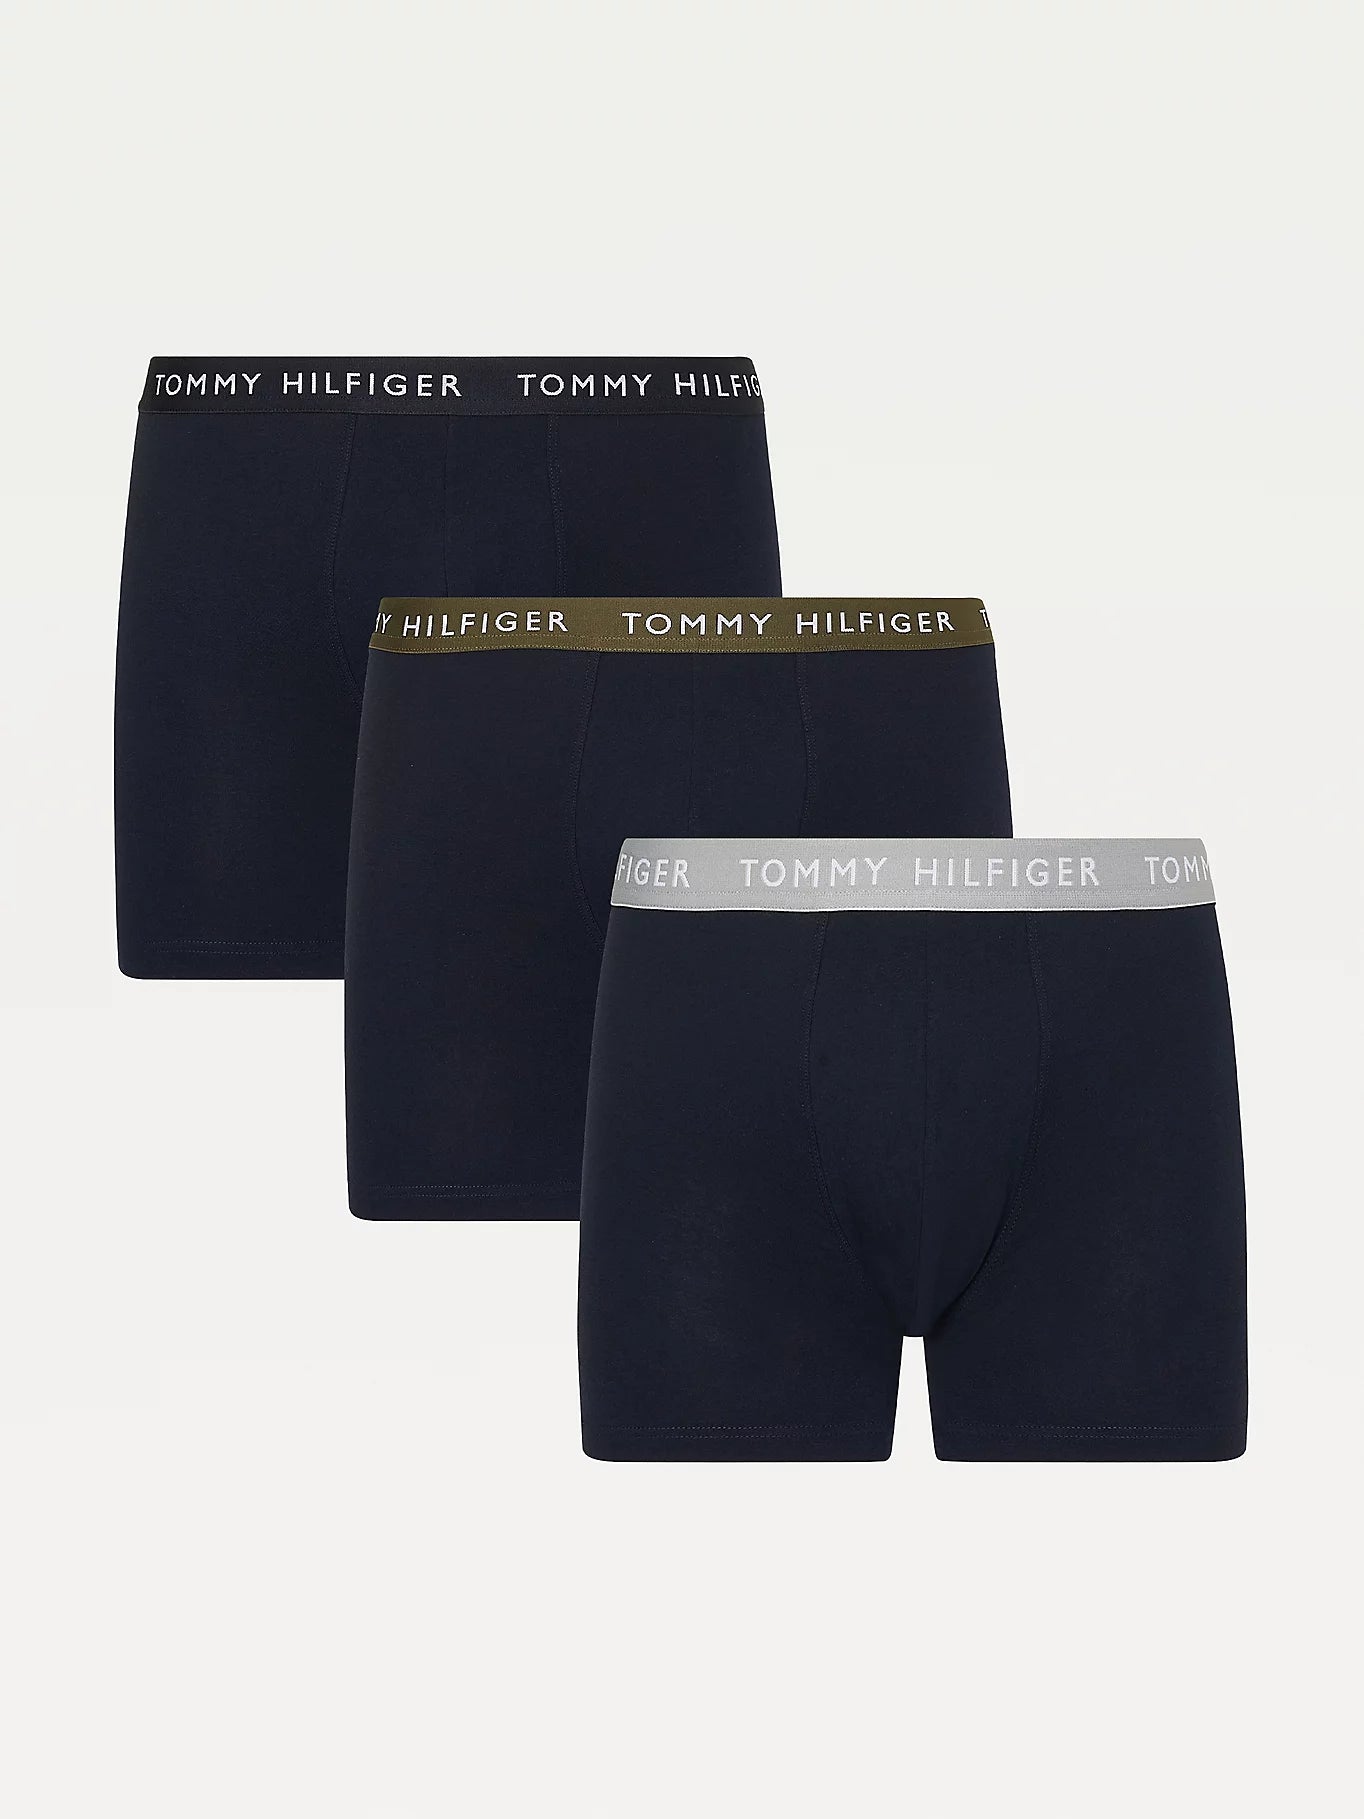 Tommy Hilfiger Men's Cotton Stretch 3-Pack Boxer Brief, Desert Sky